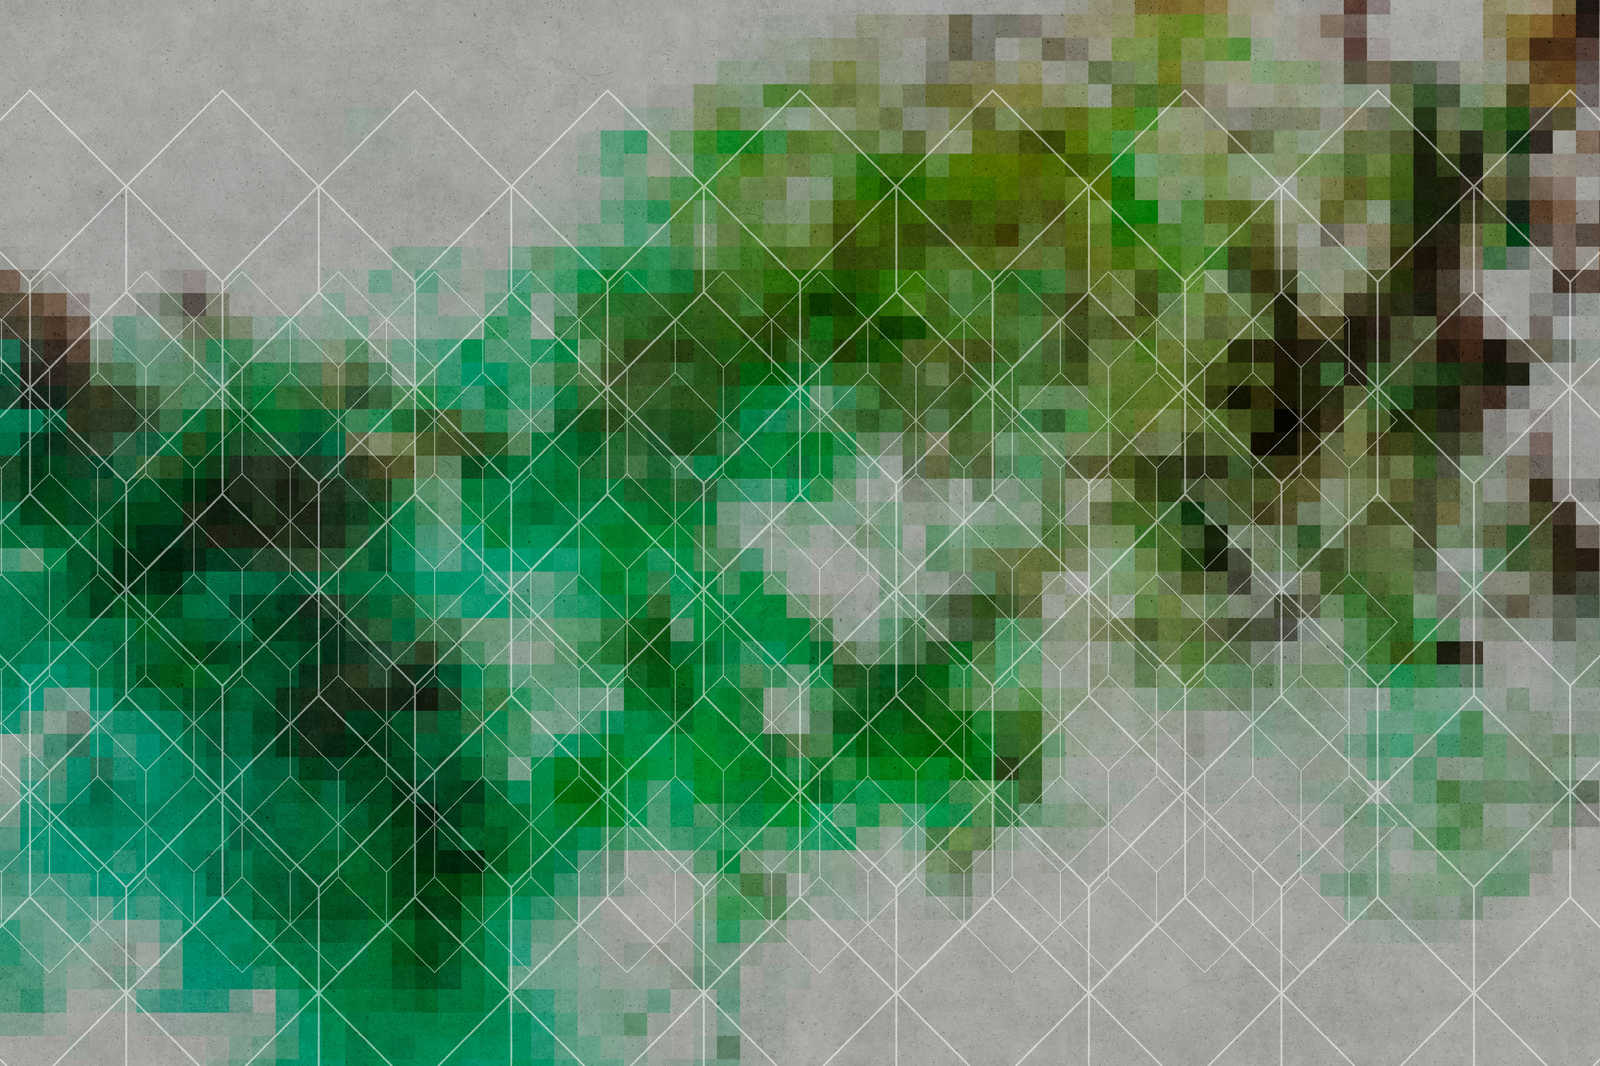             Leinwandbild Farbe-Wolken & Linienmuster | grün, grau – 1,20 m x 0,80 m
        